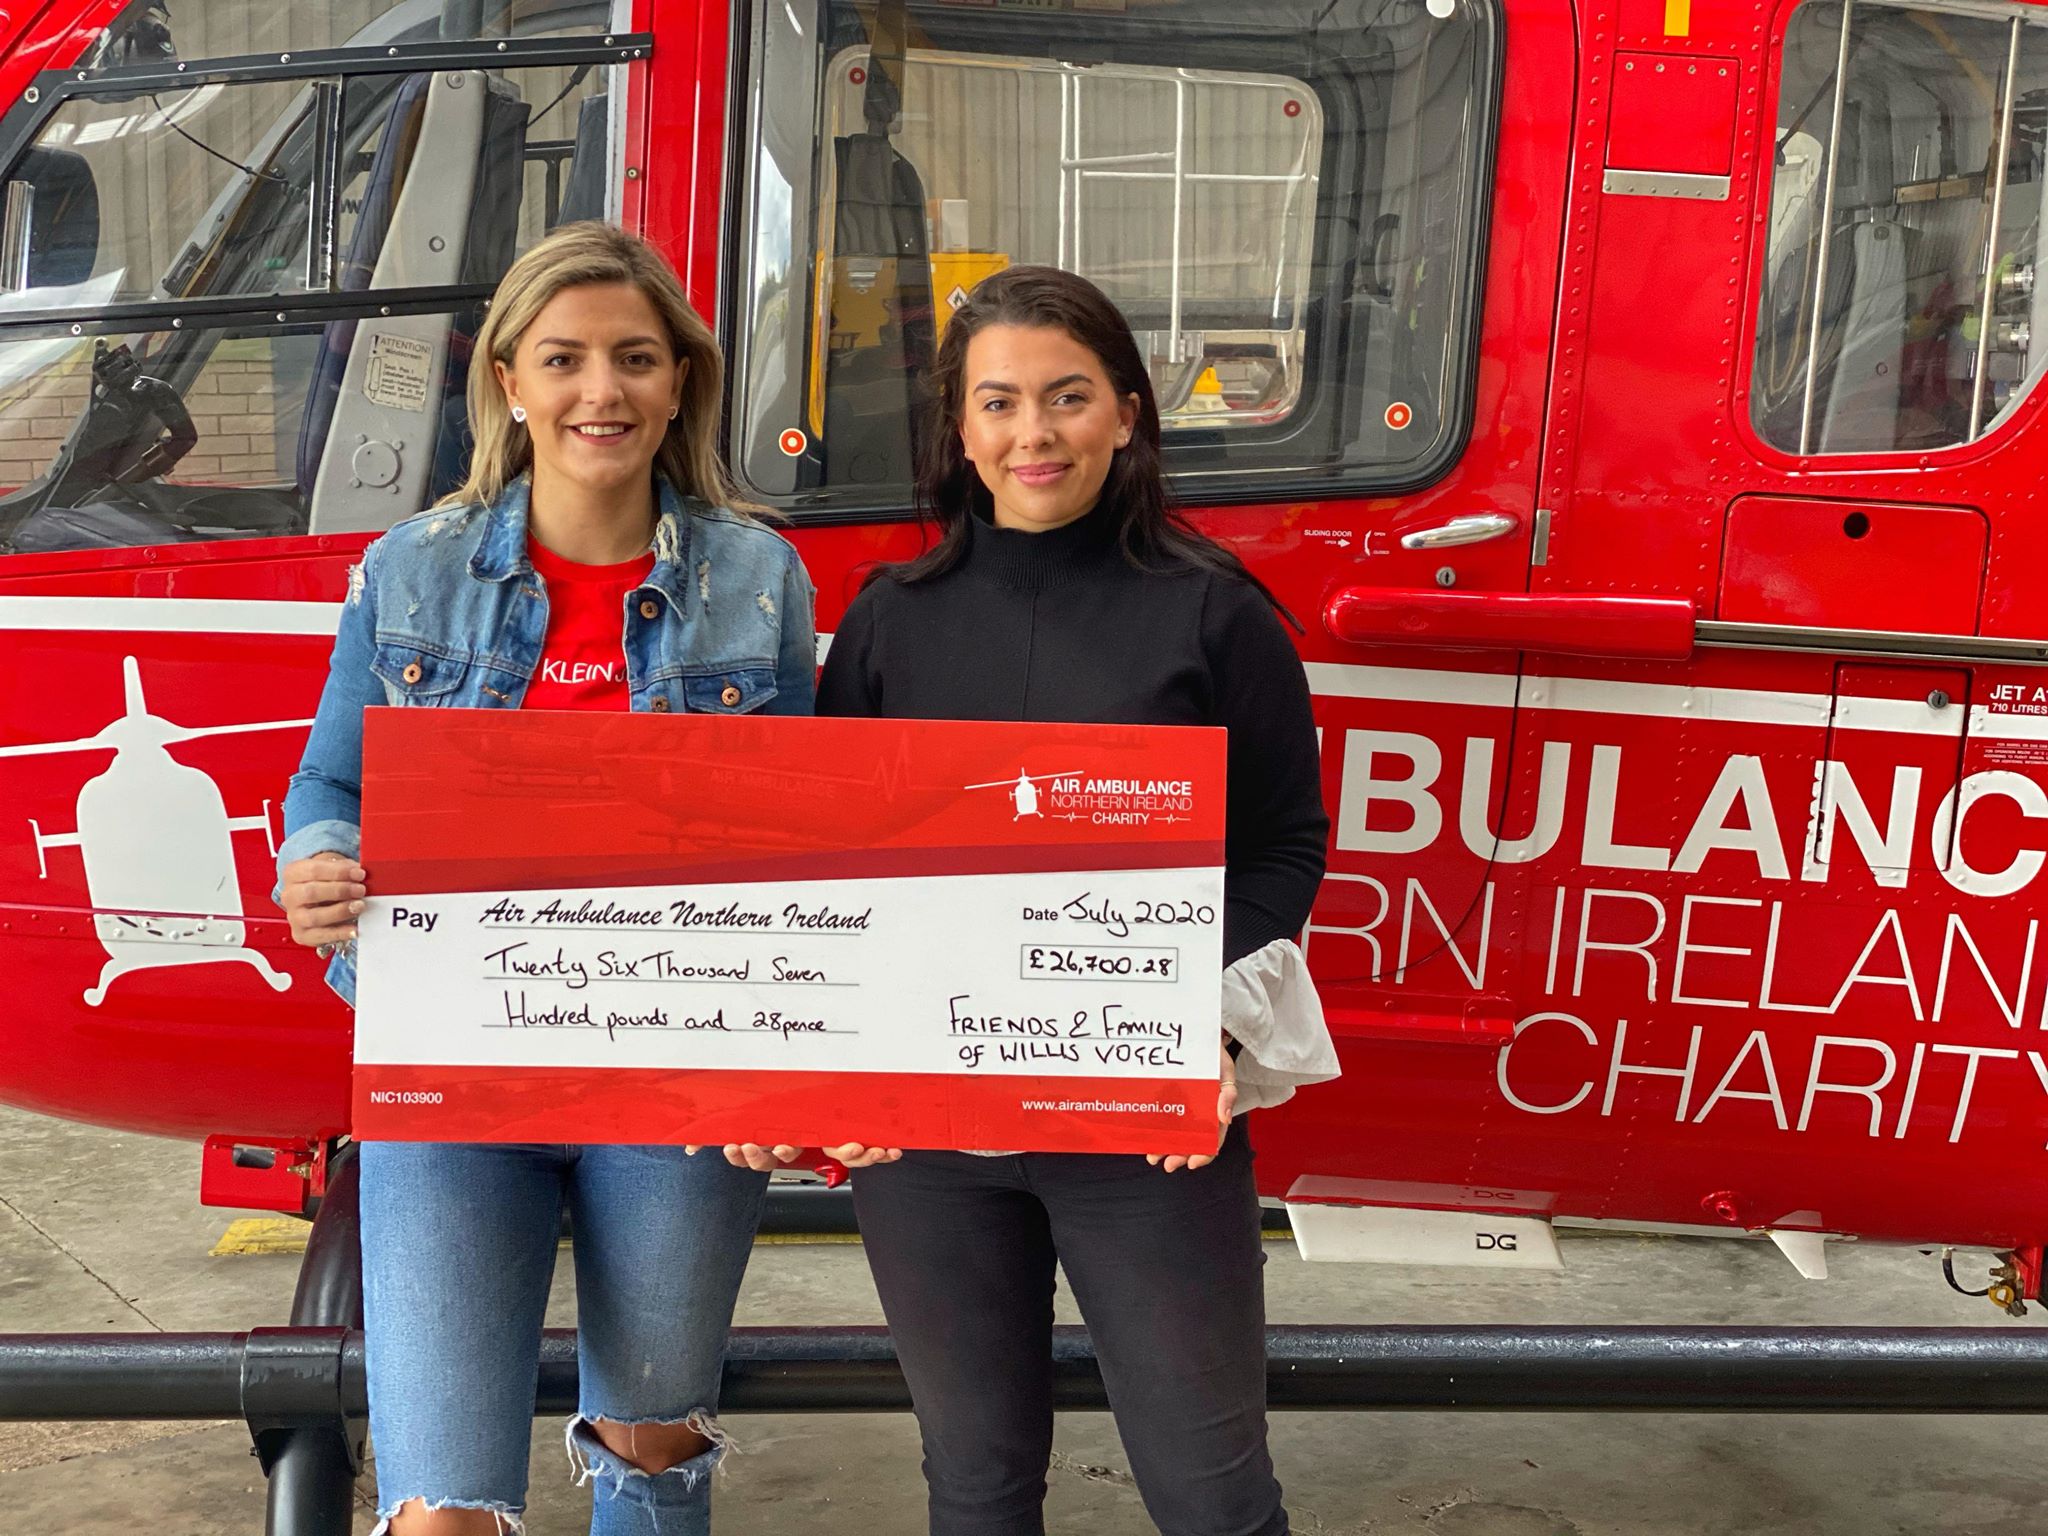 Crash victim’s family donates £26,700 to Air Ambulance